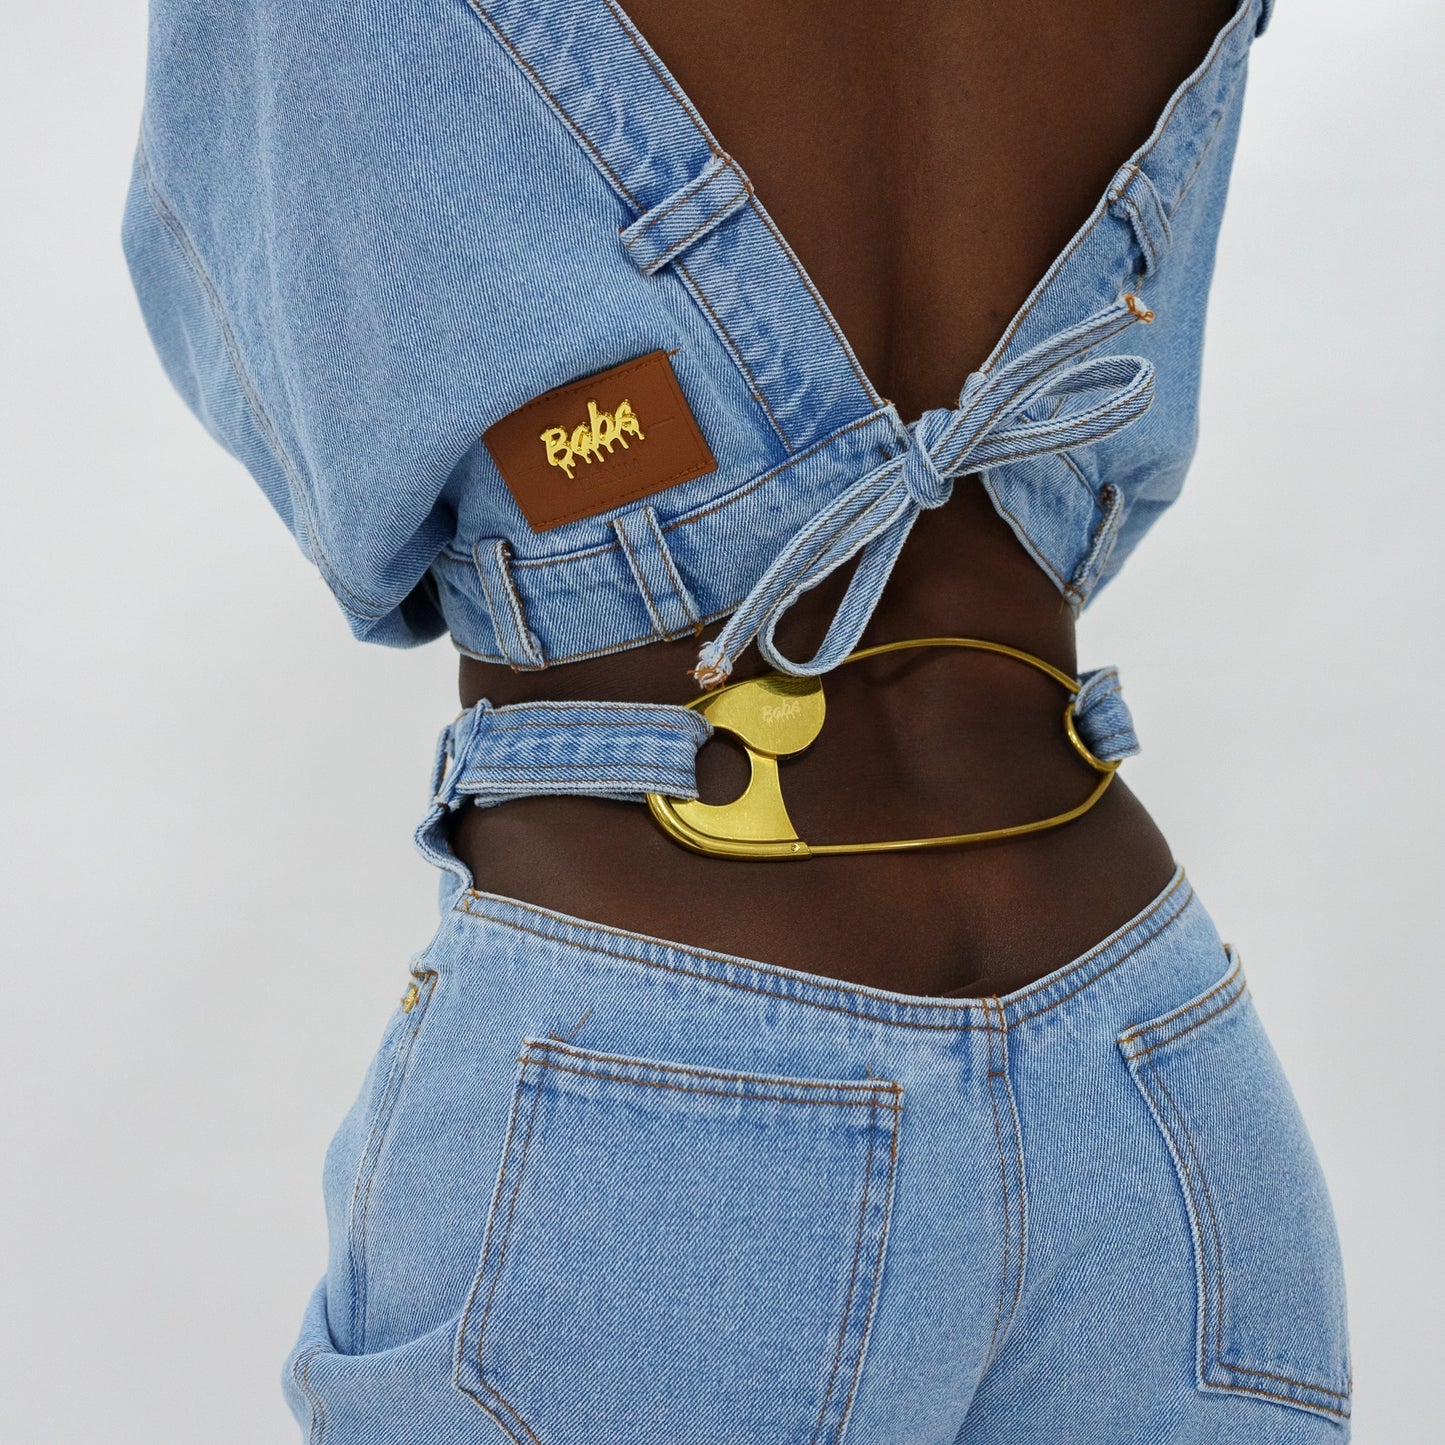 Back safety pin denim pants